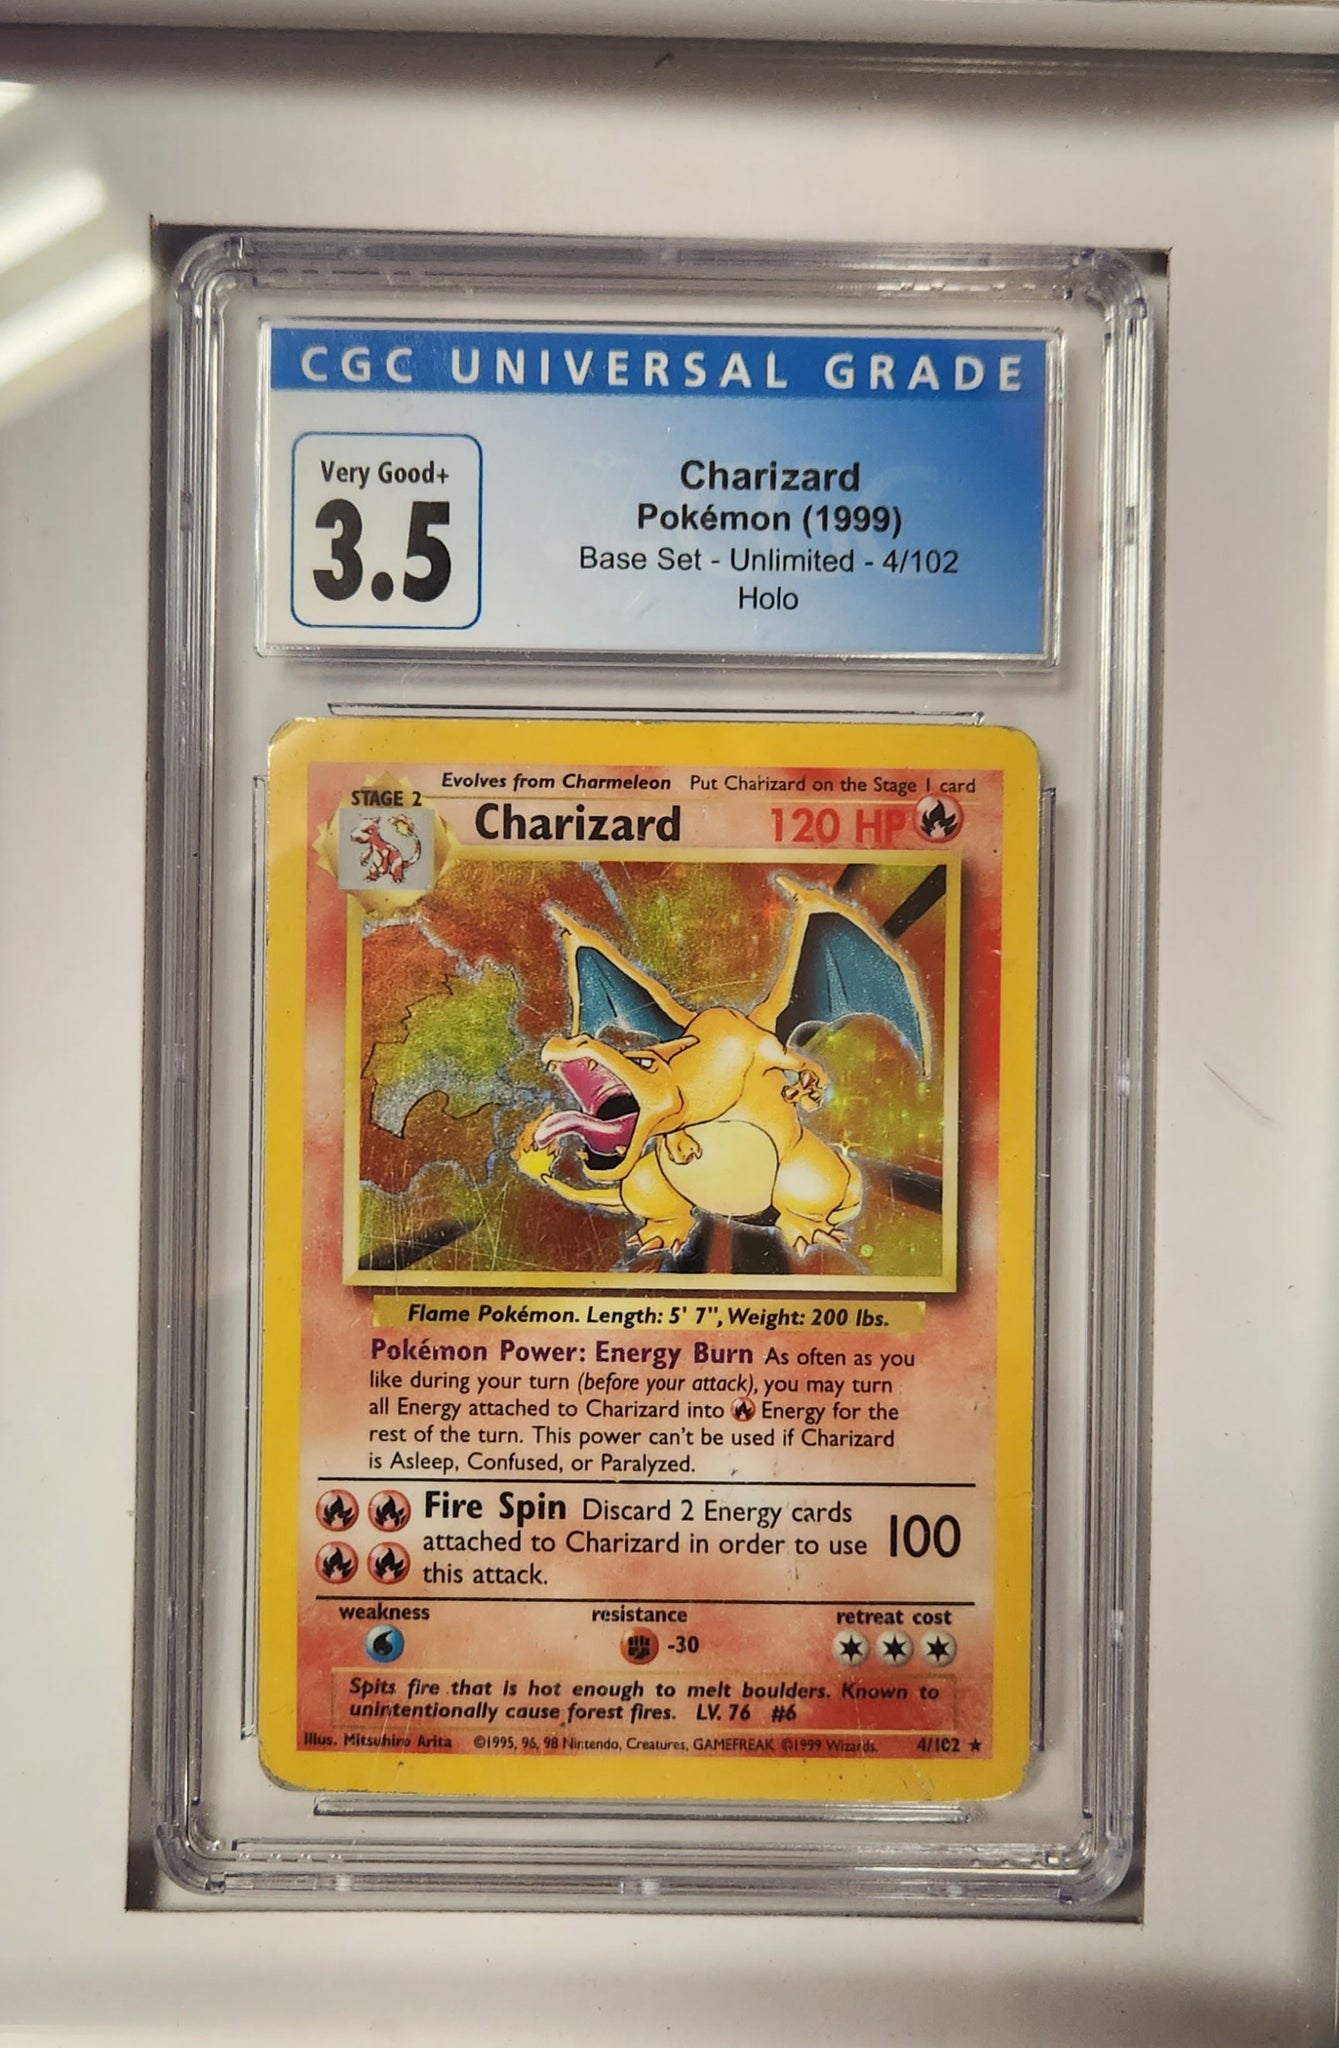 Charizard - Pokemon (1999) - Base Set - Unlimited - 4/102 - Holo - CGC Graded 3.5 to 5